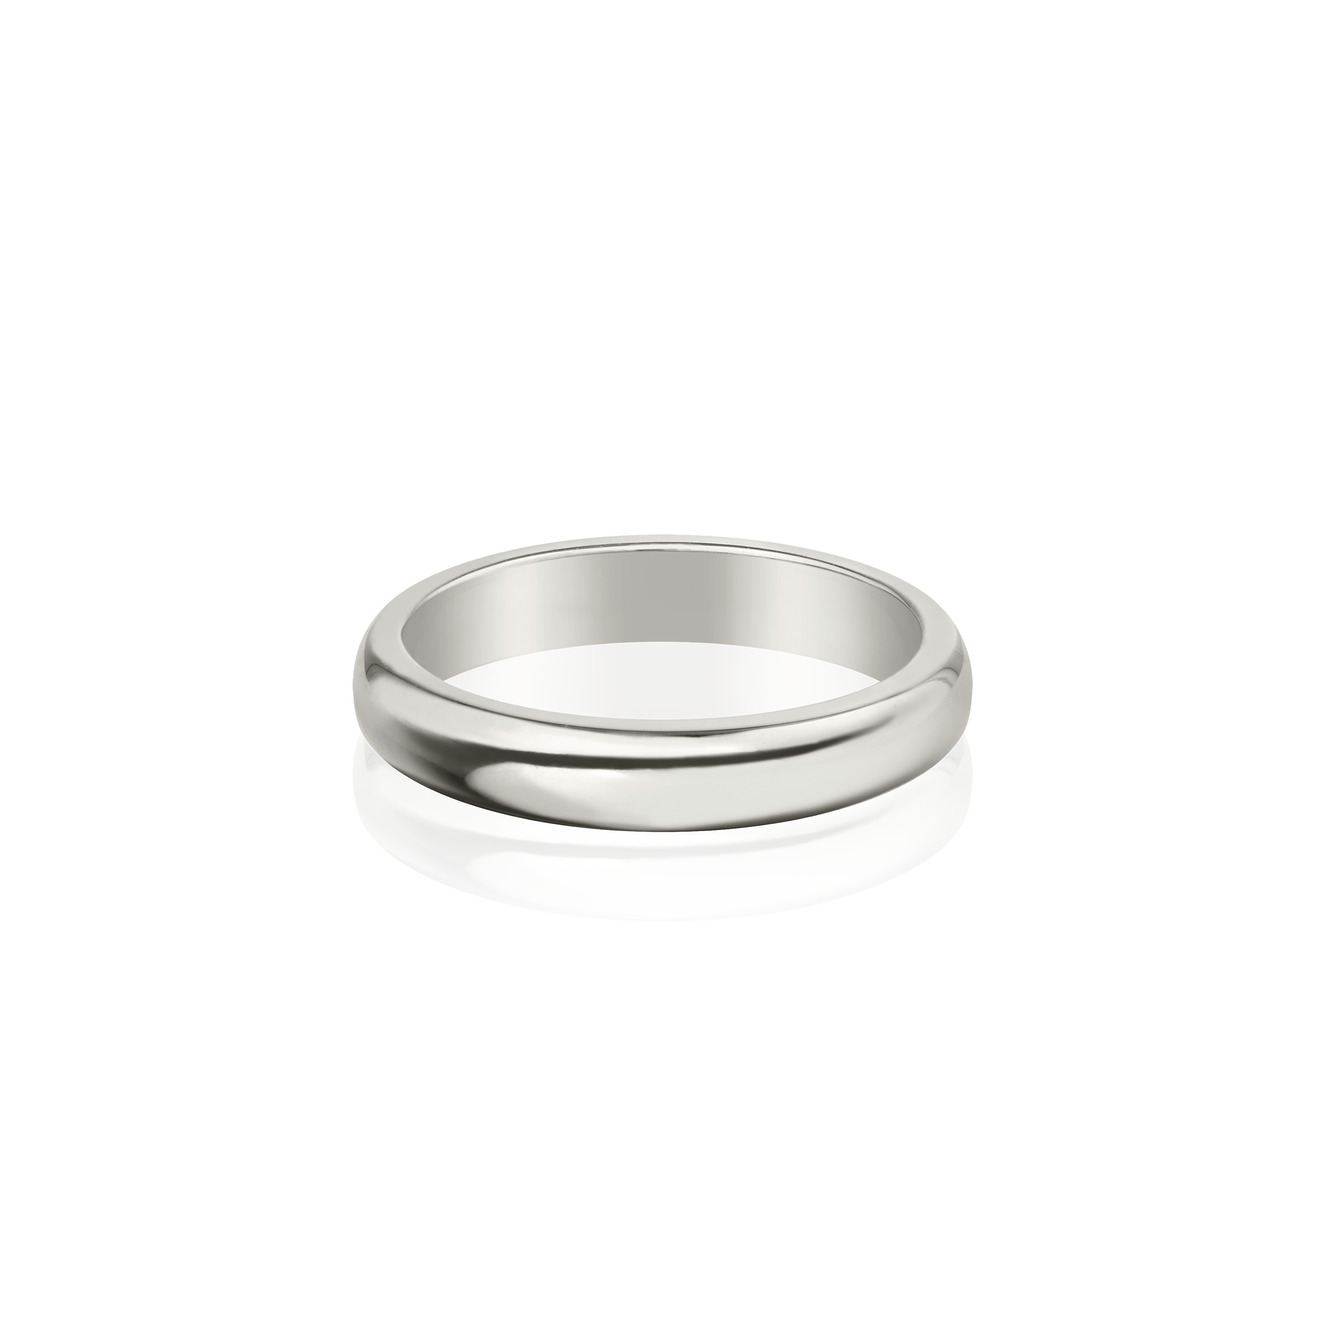 Vertigo Jewellery Lab Фаланговое кольцо из серебра ESSENTIALS vertigo jewellery lab кафф e cuff essentials из серебра